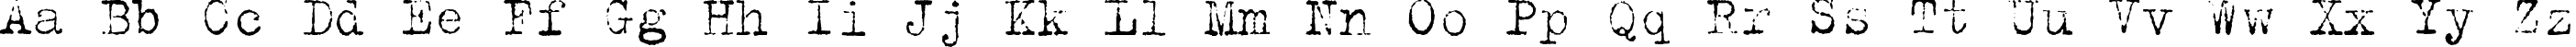 Пример написания английского алфавита шрифтом TrixieCyr-Light